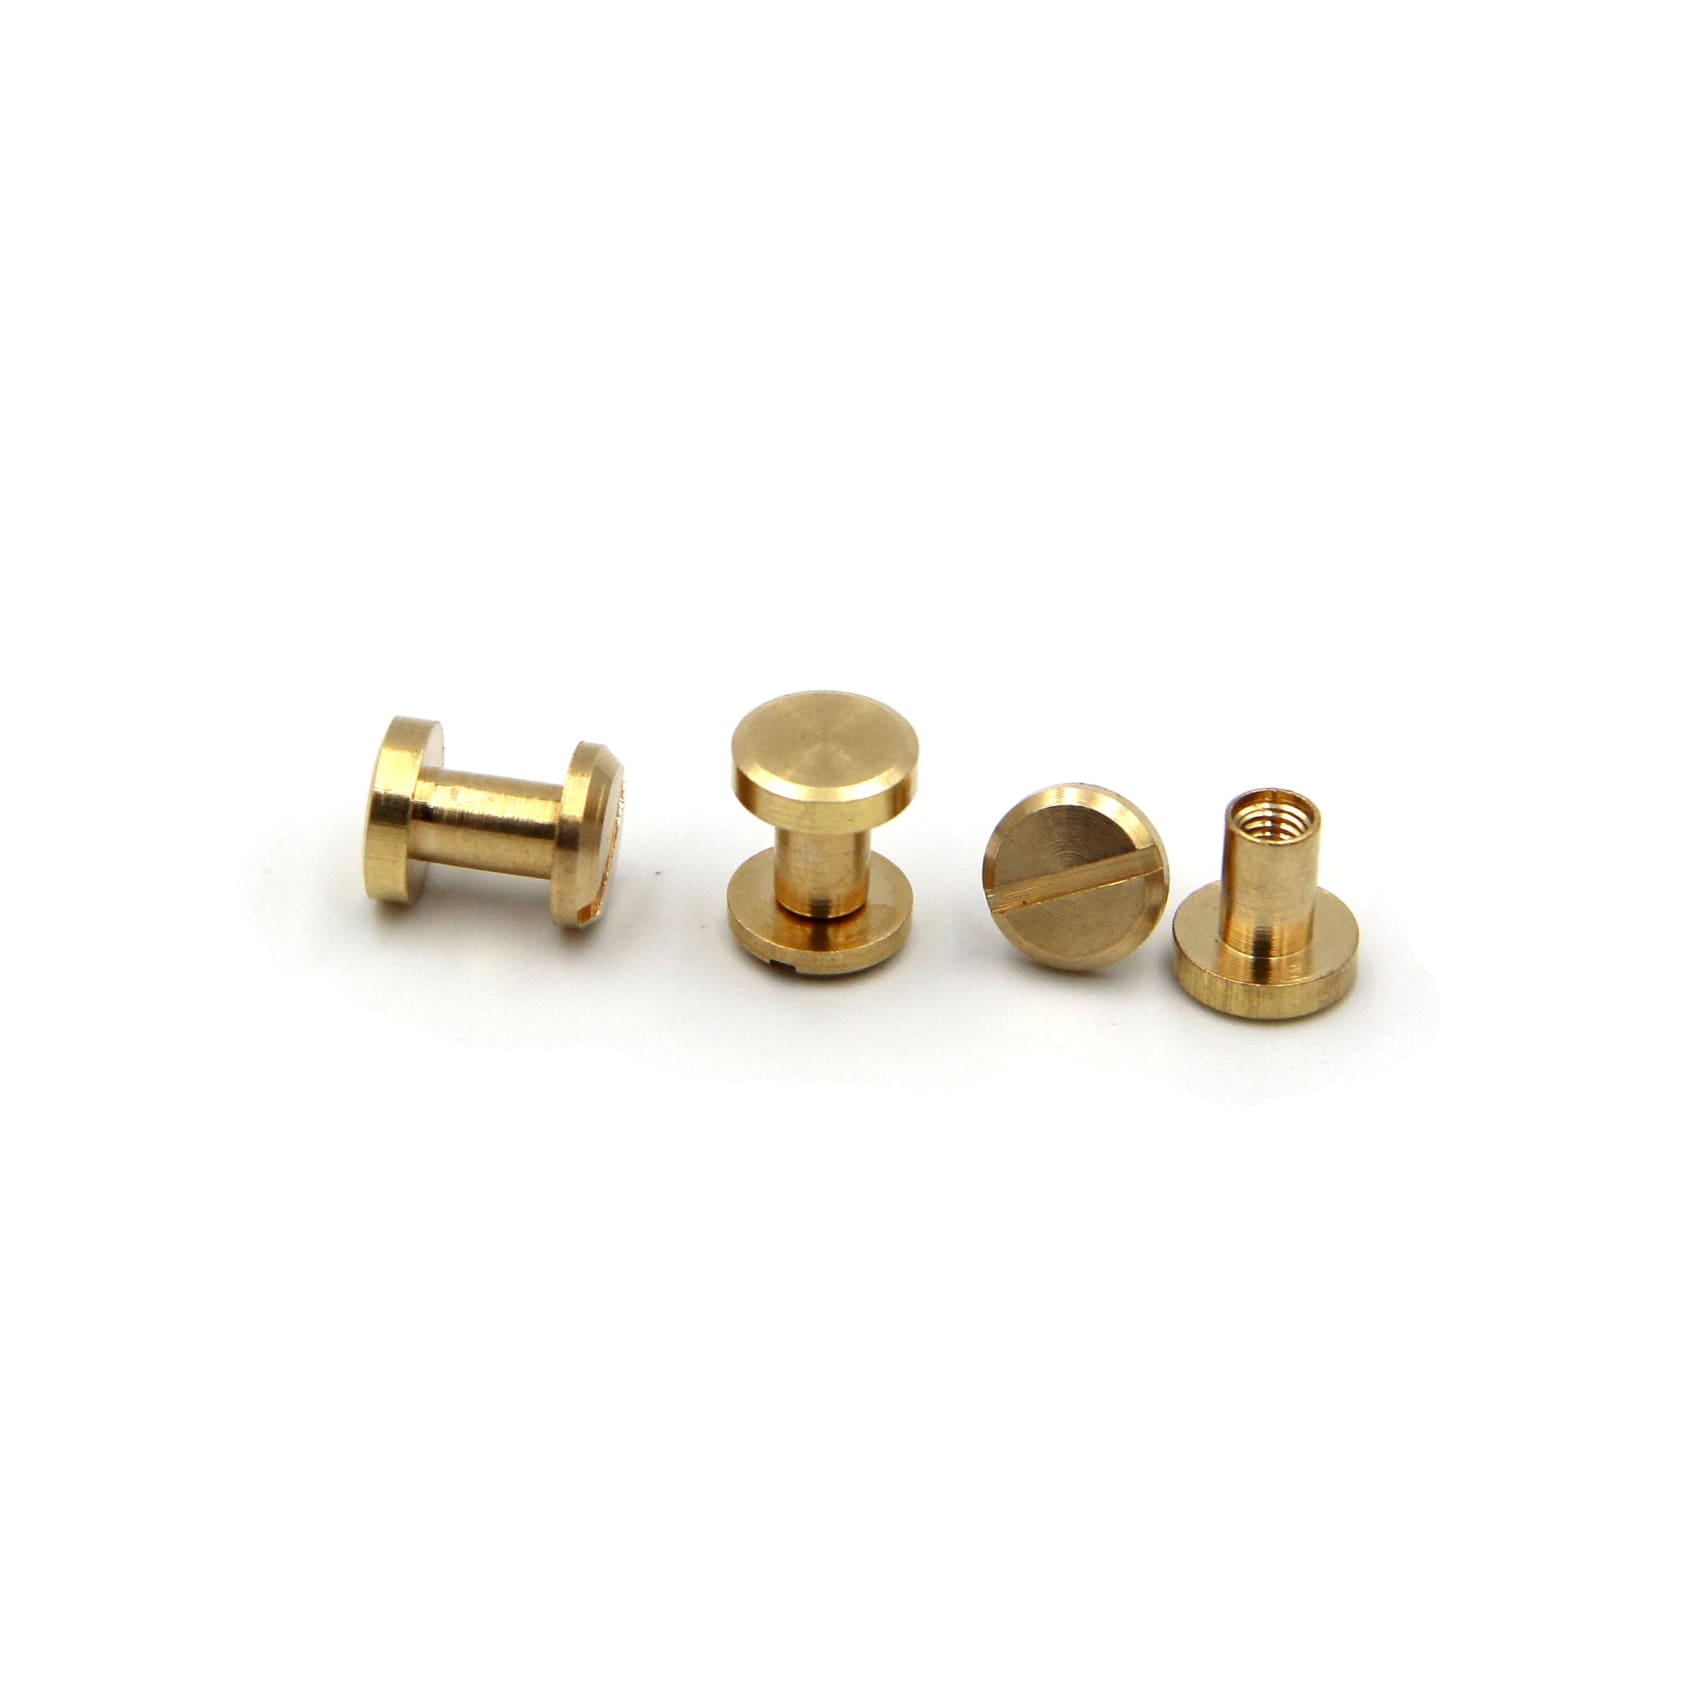 8x4x6mm Gold&Silver Screw Post Leather Fastener Screws Brass Chicago Rivets - Gold / 1pcs - Screw Rivets